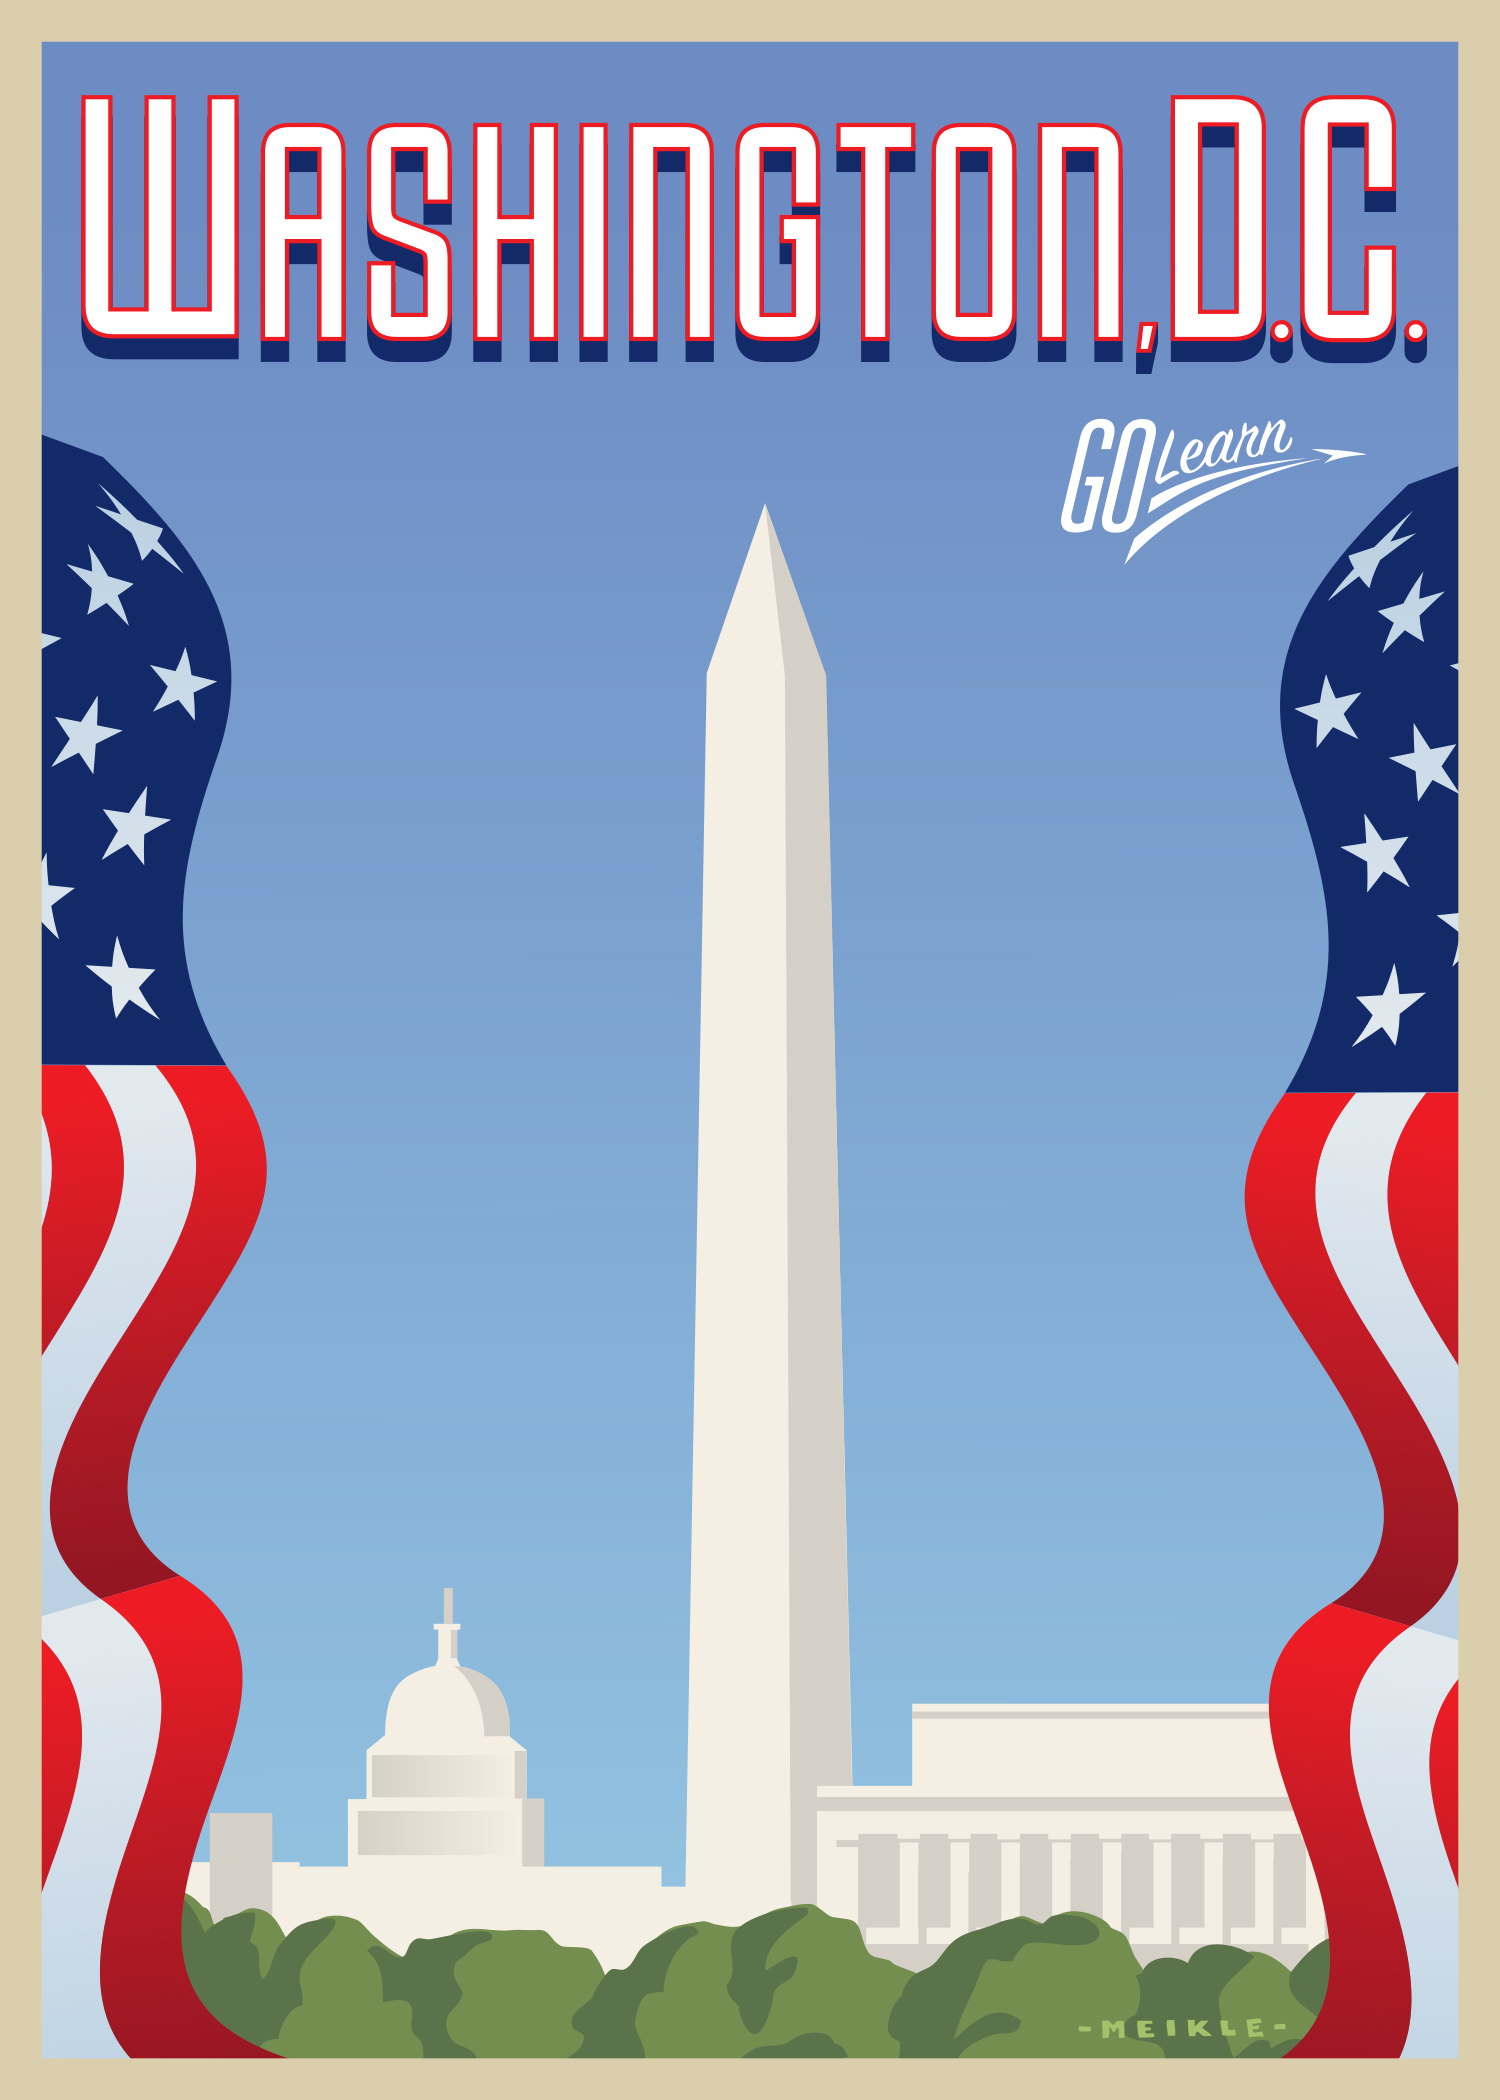 Washington D.C. Go Learn poster